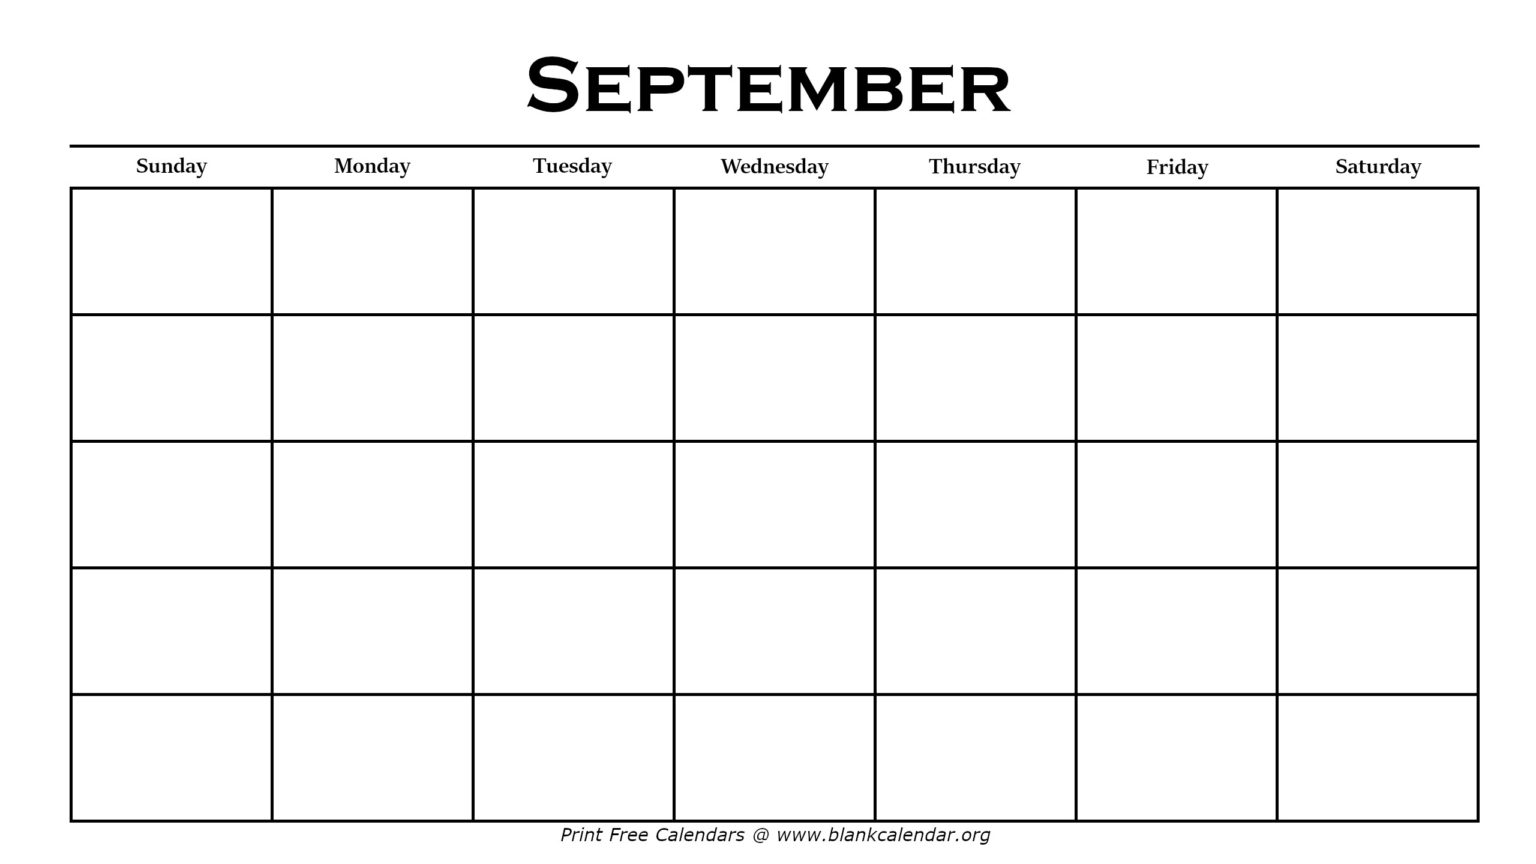 printable-september-calendars-blank-calendar